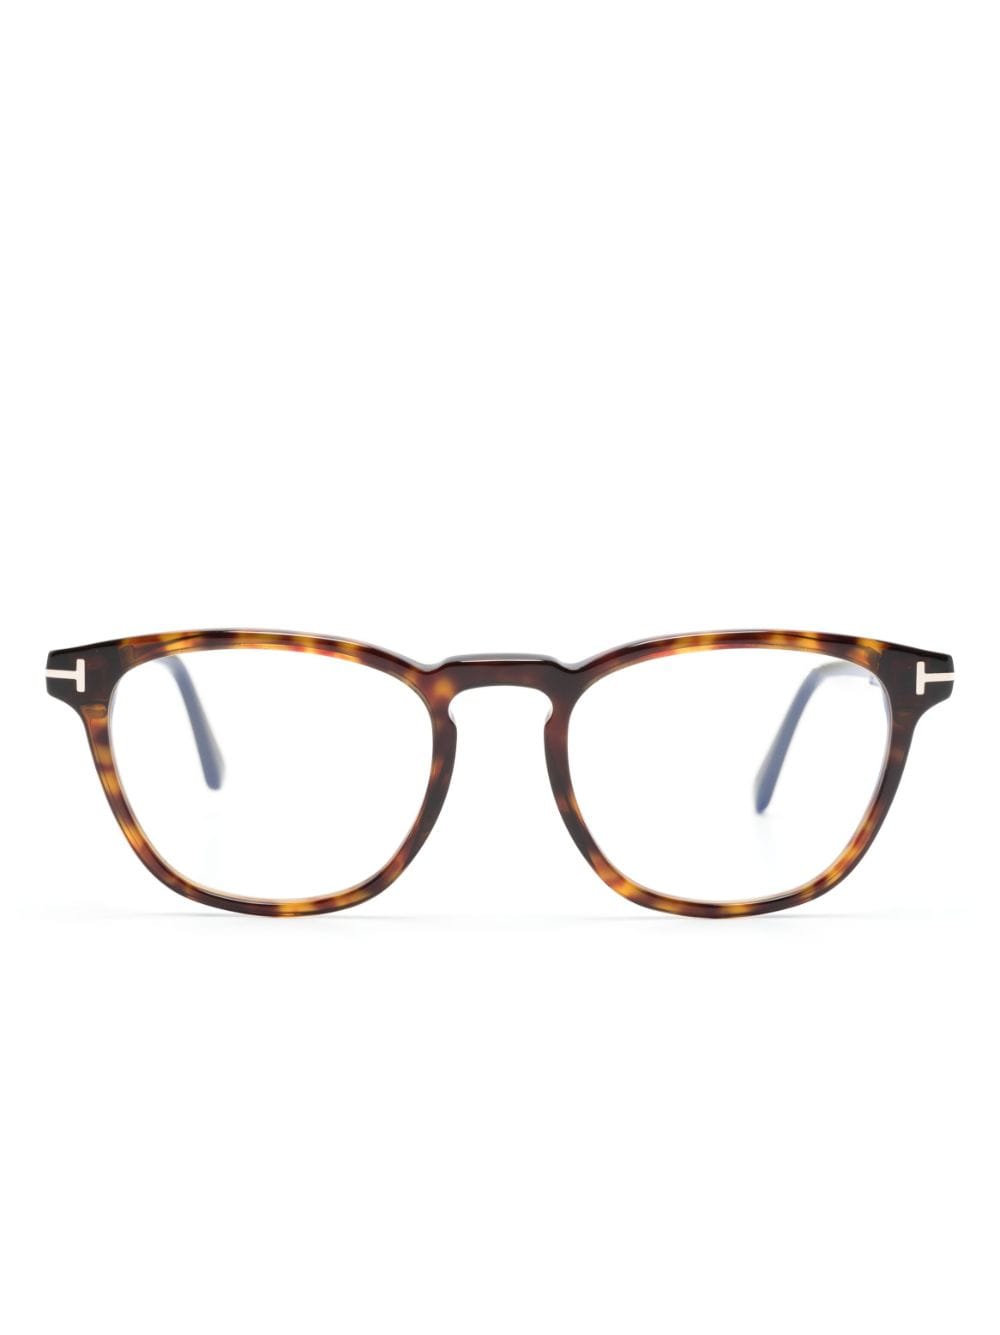 Image 1 of TOM FORD Eyewear tortoiseshell-effect round-frame glasses